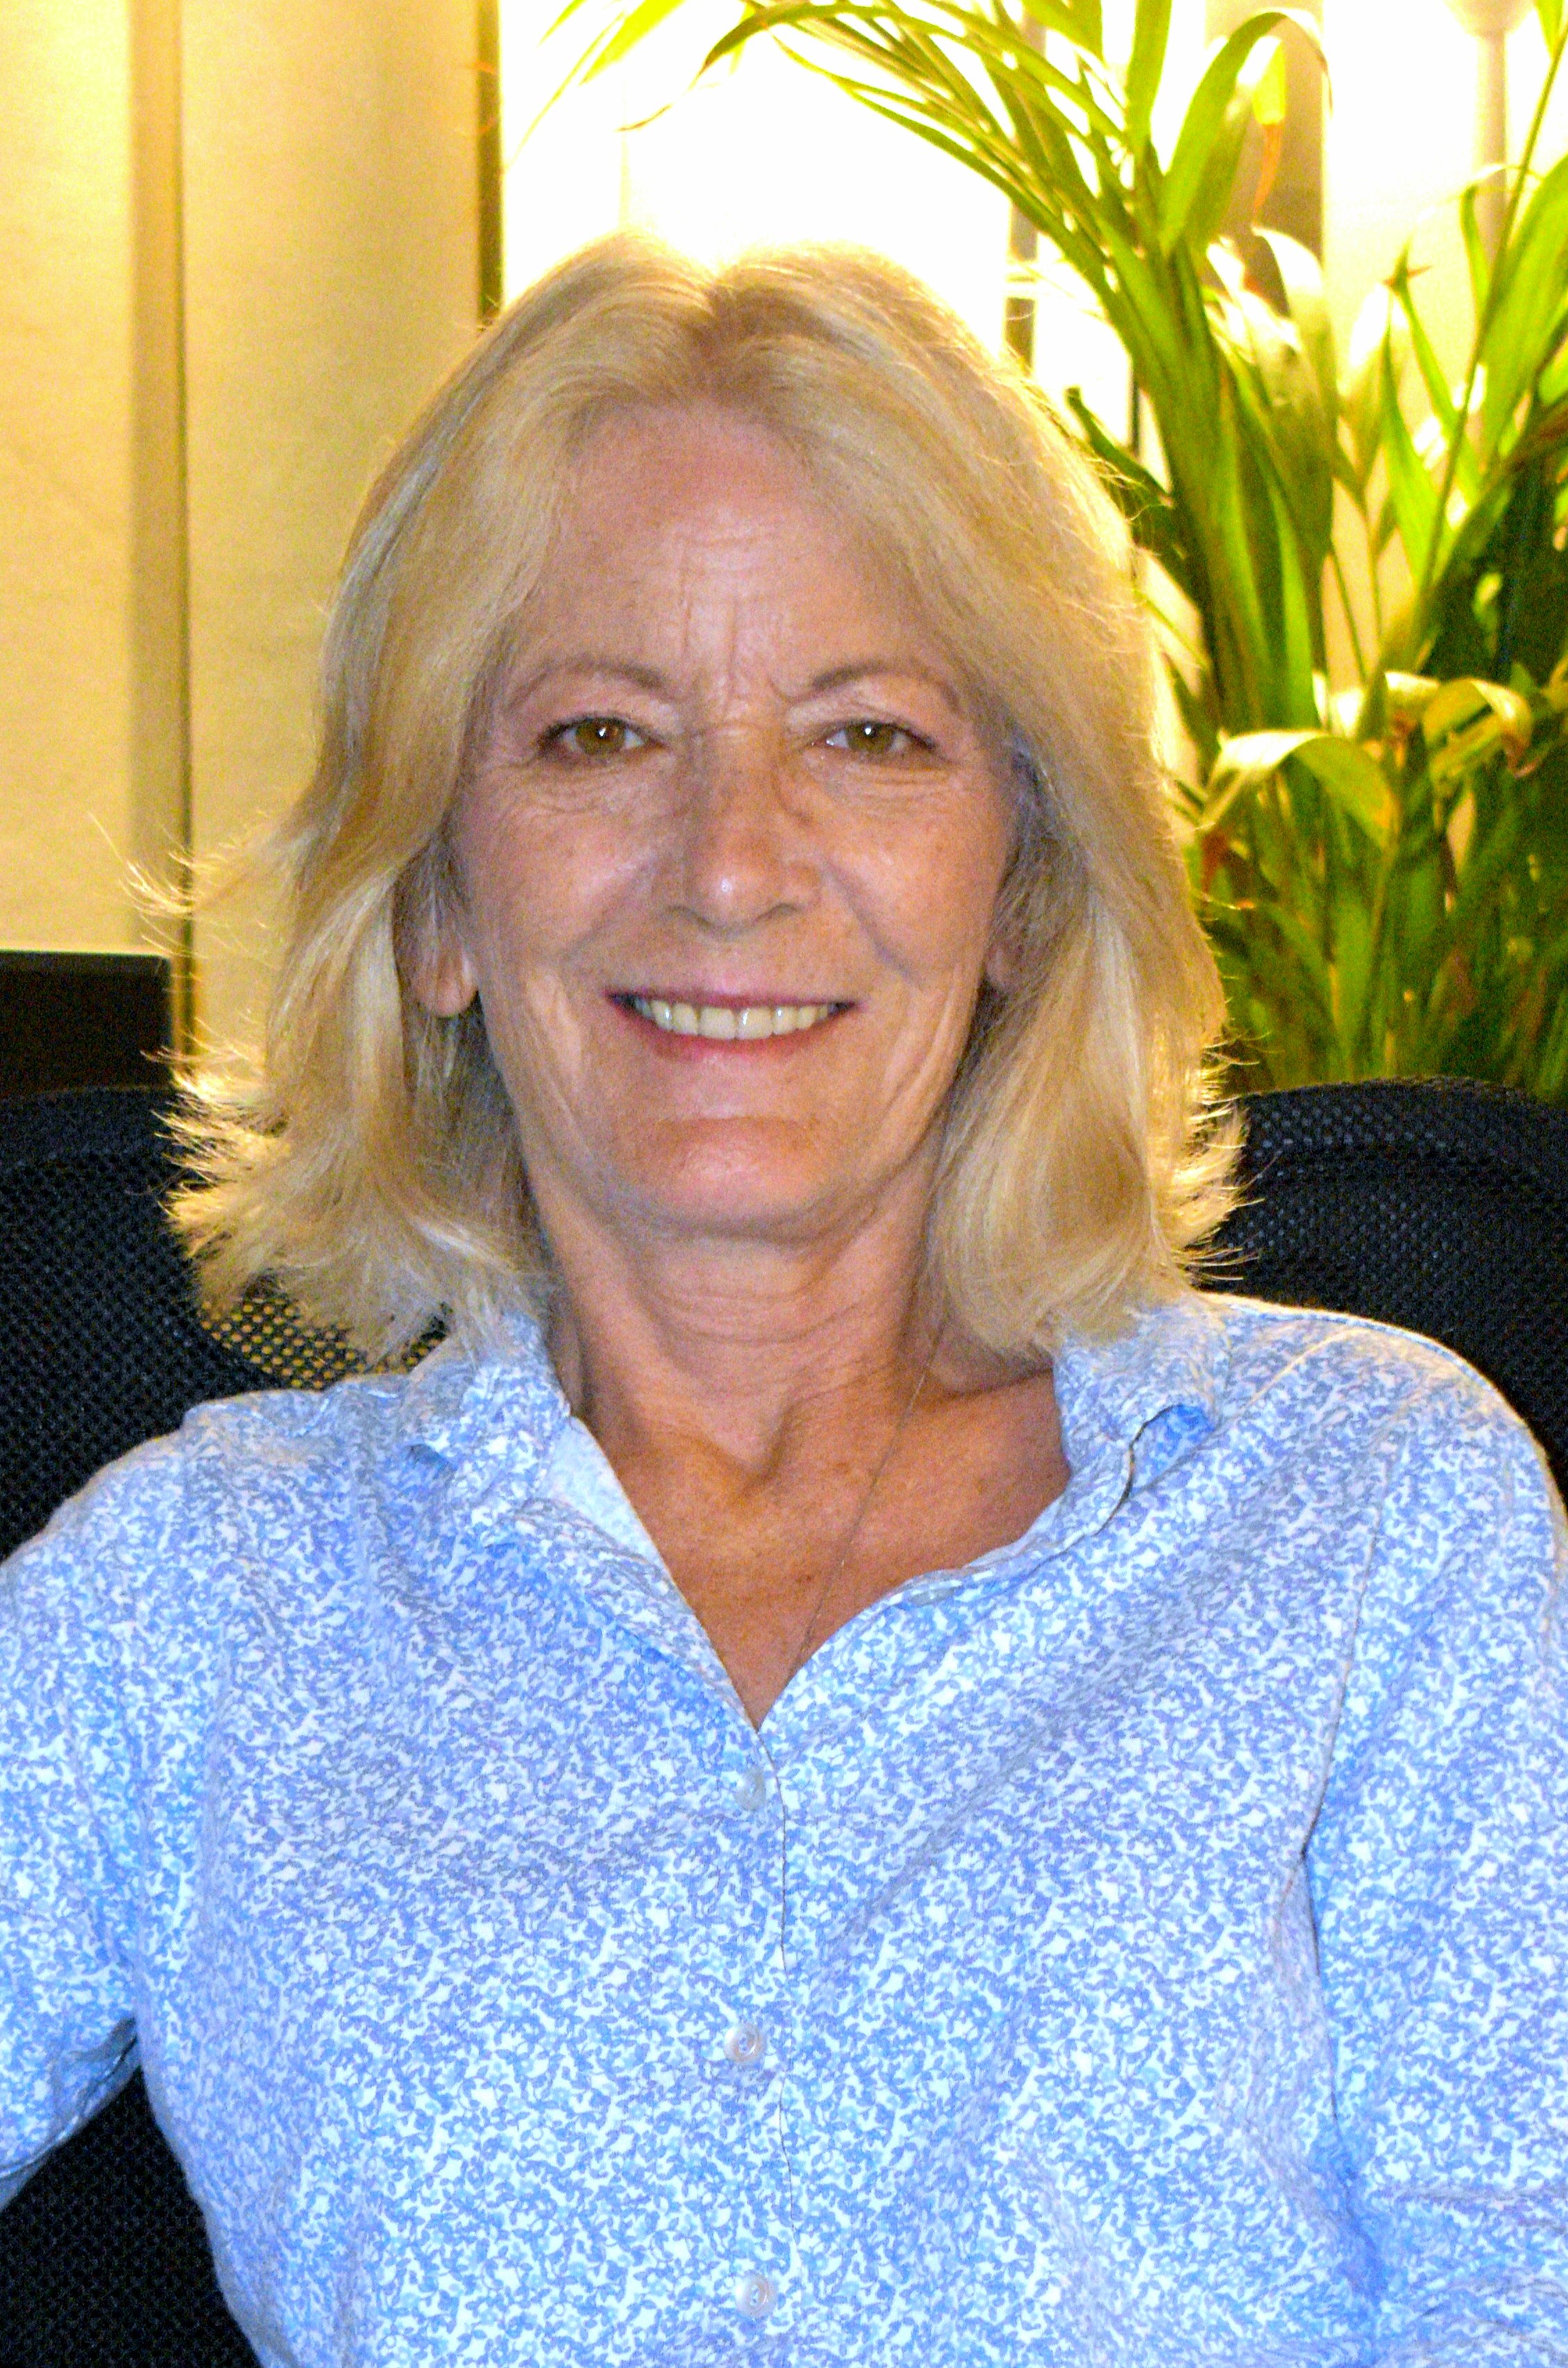 Angela Holt